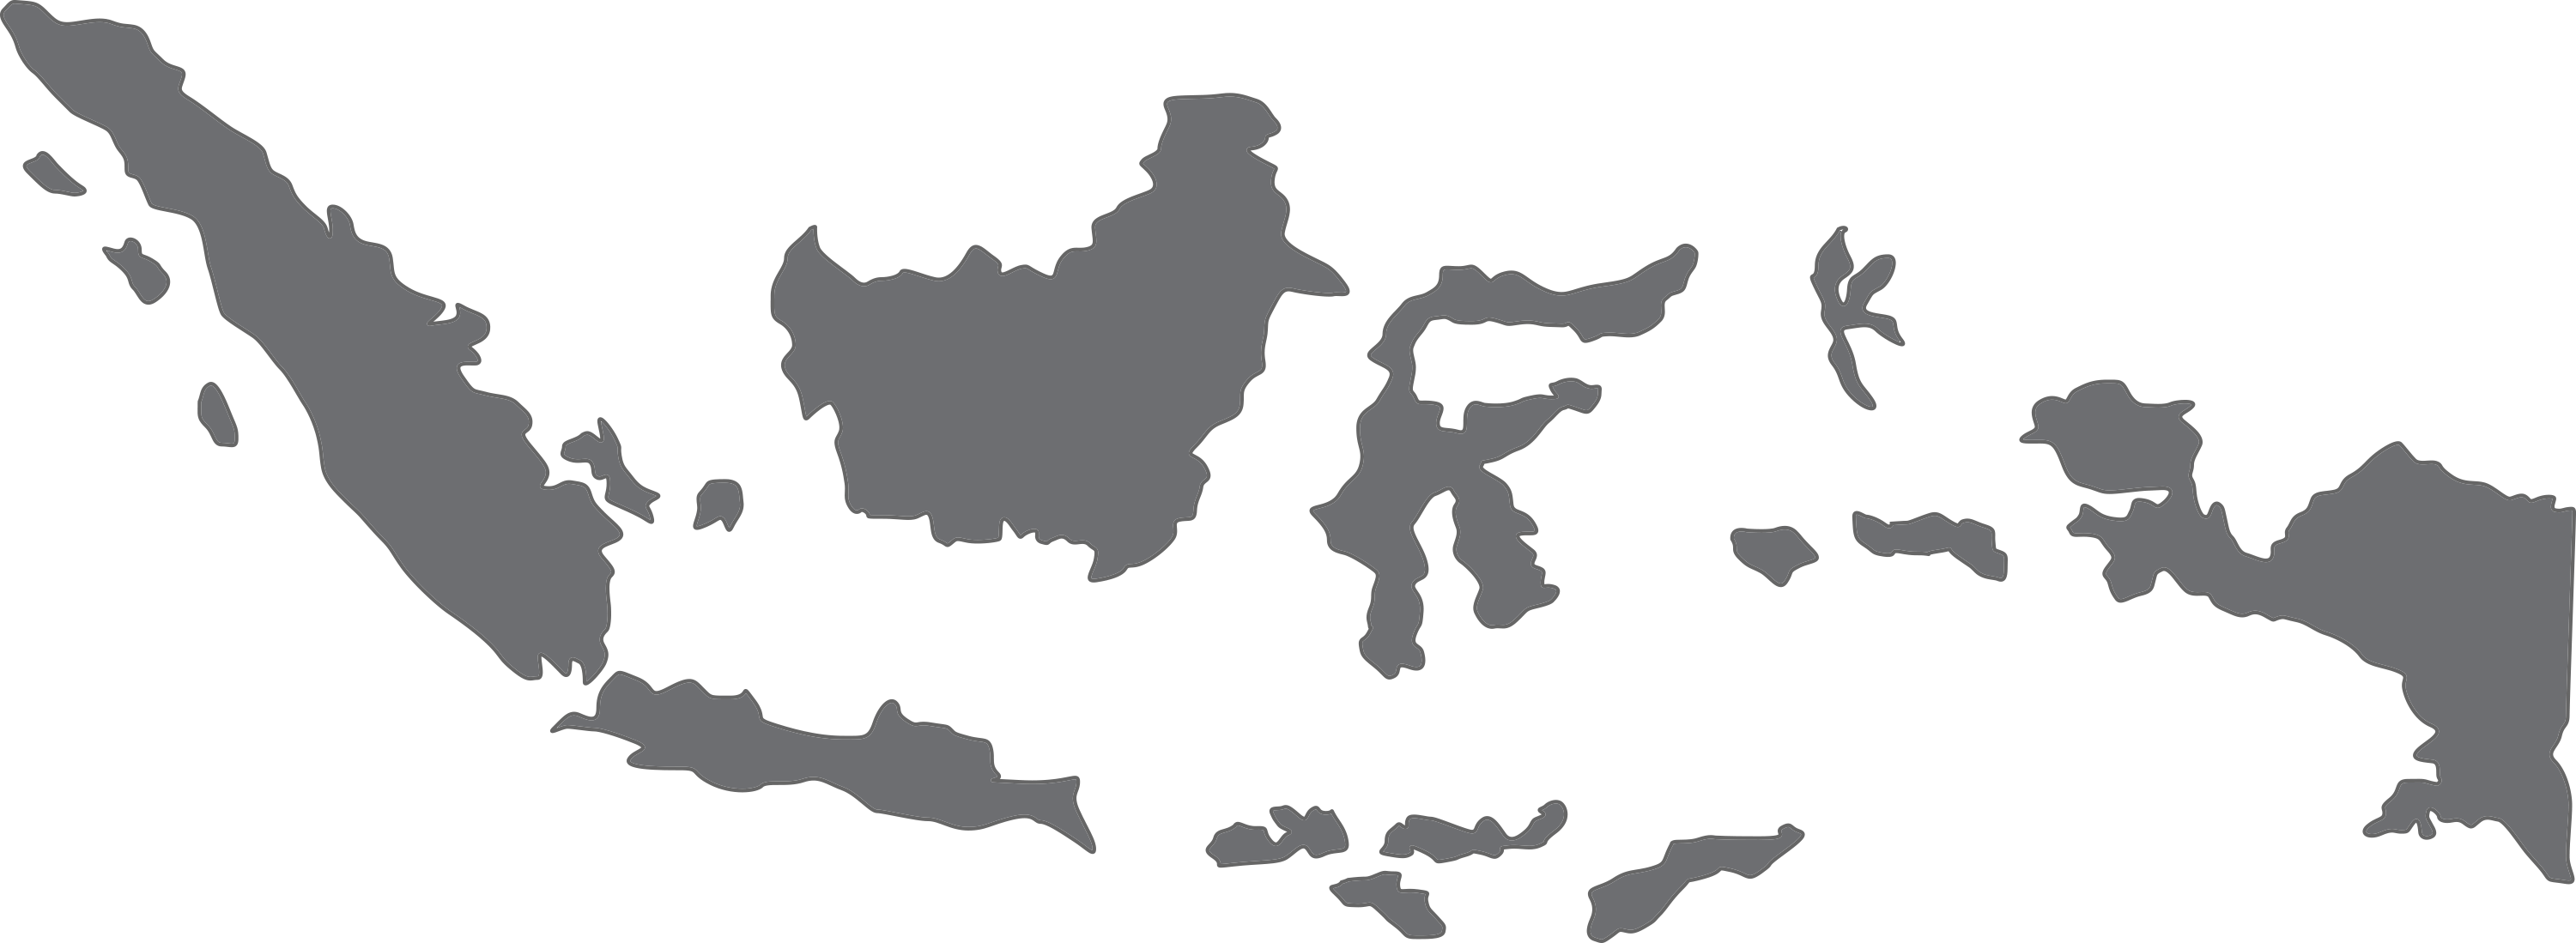 map-indonesia